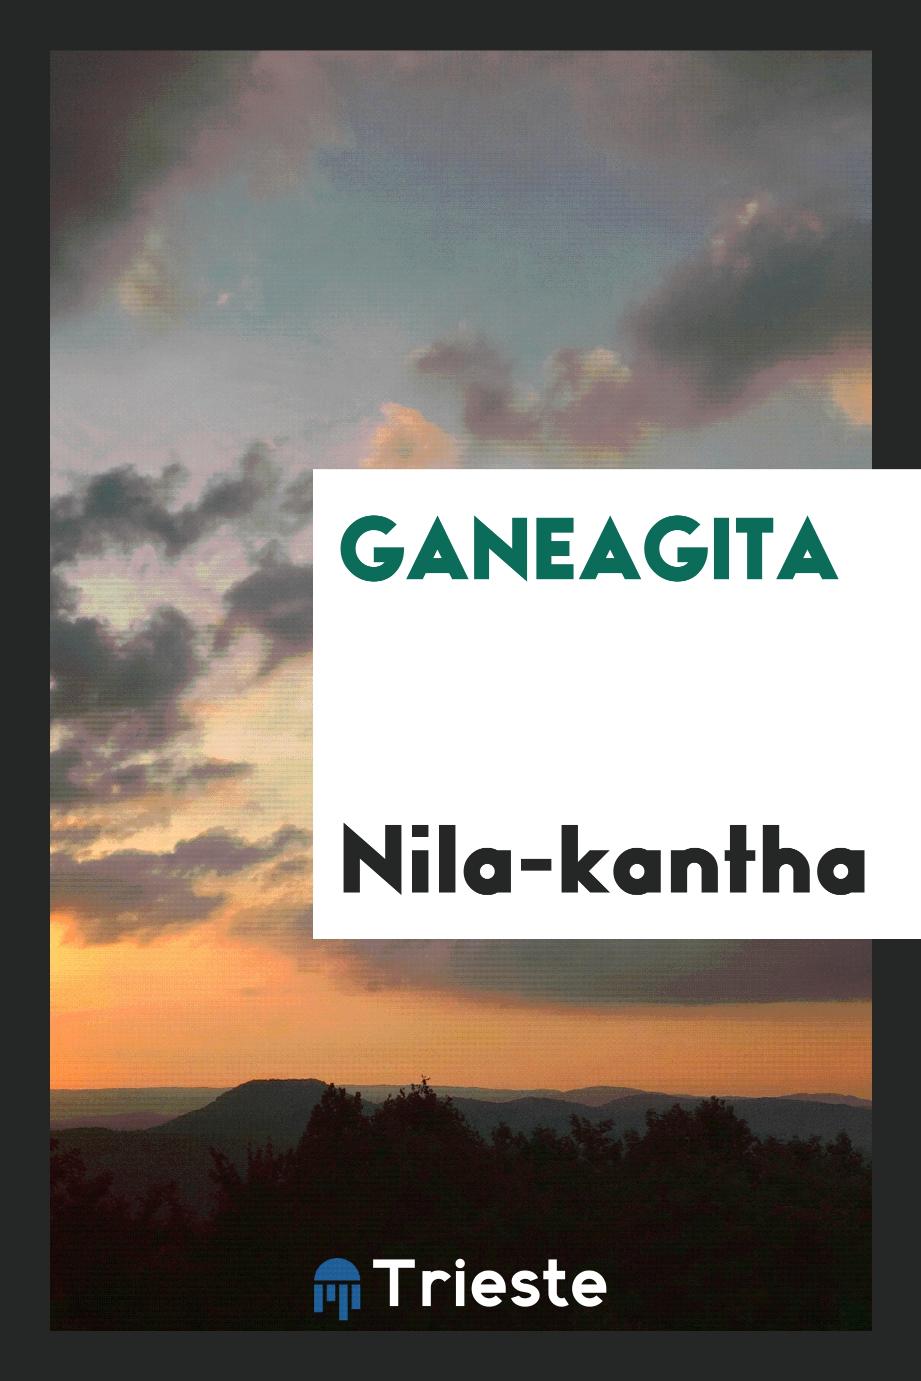 Ganeagita